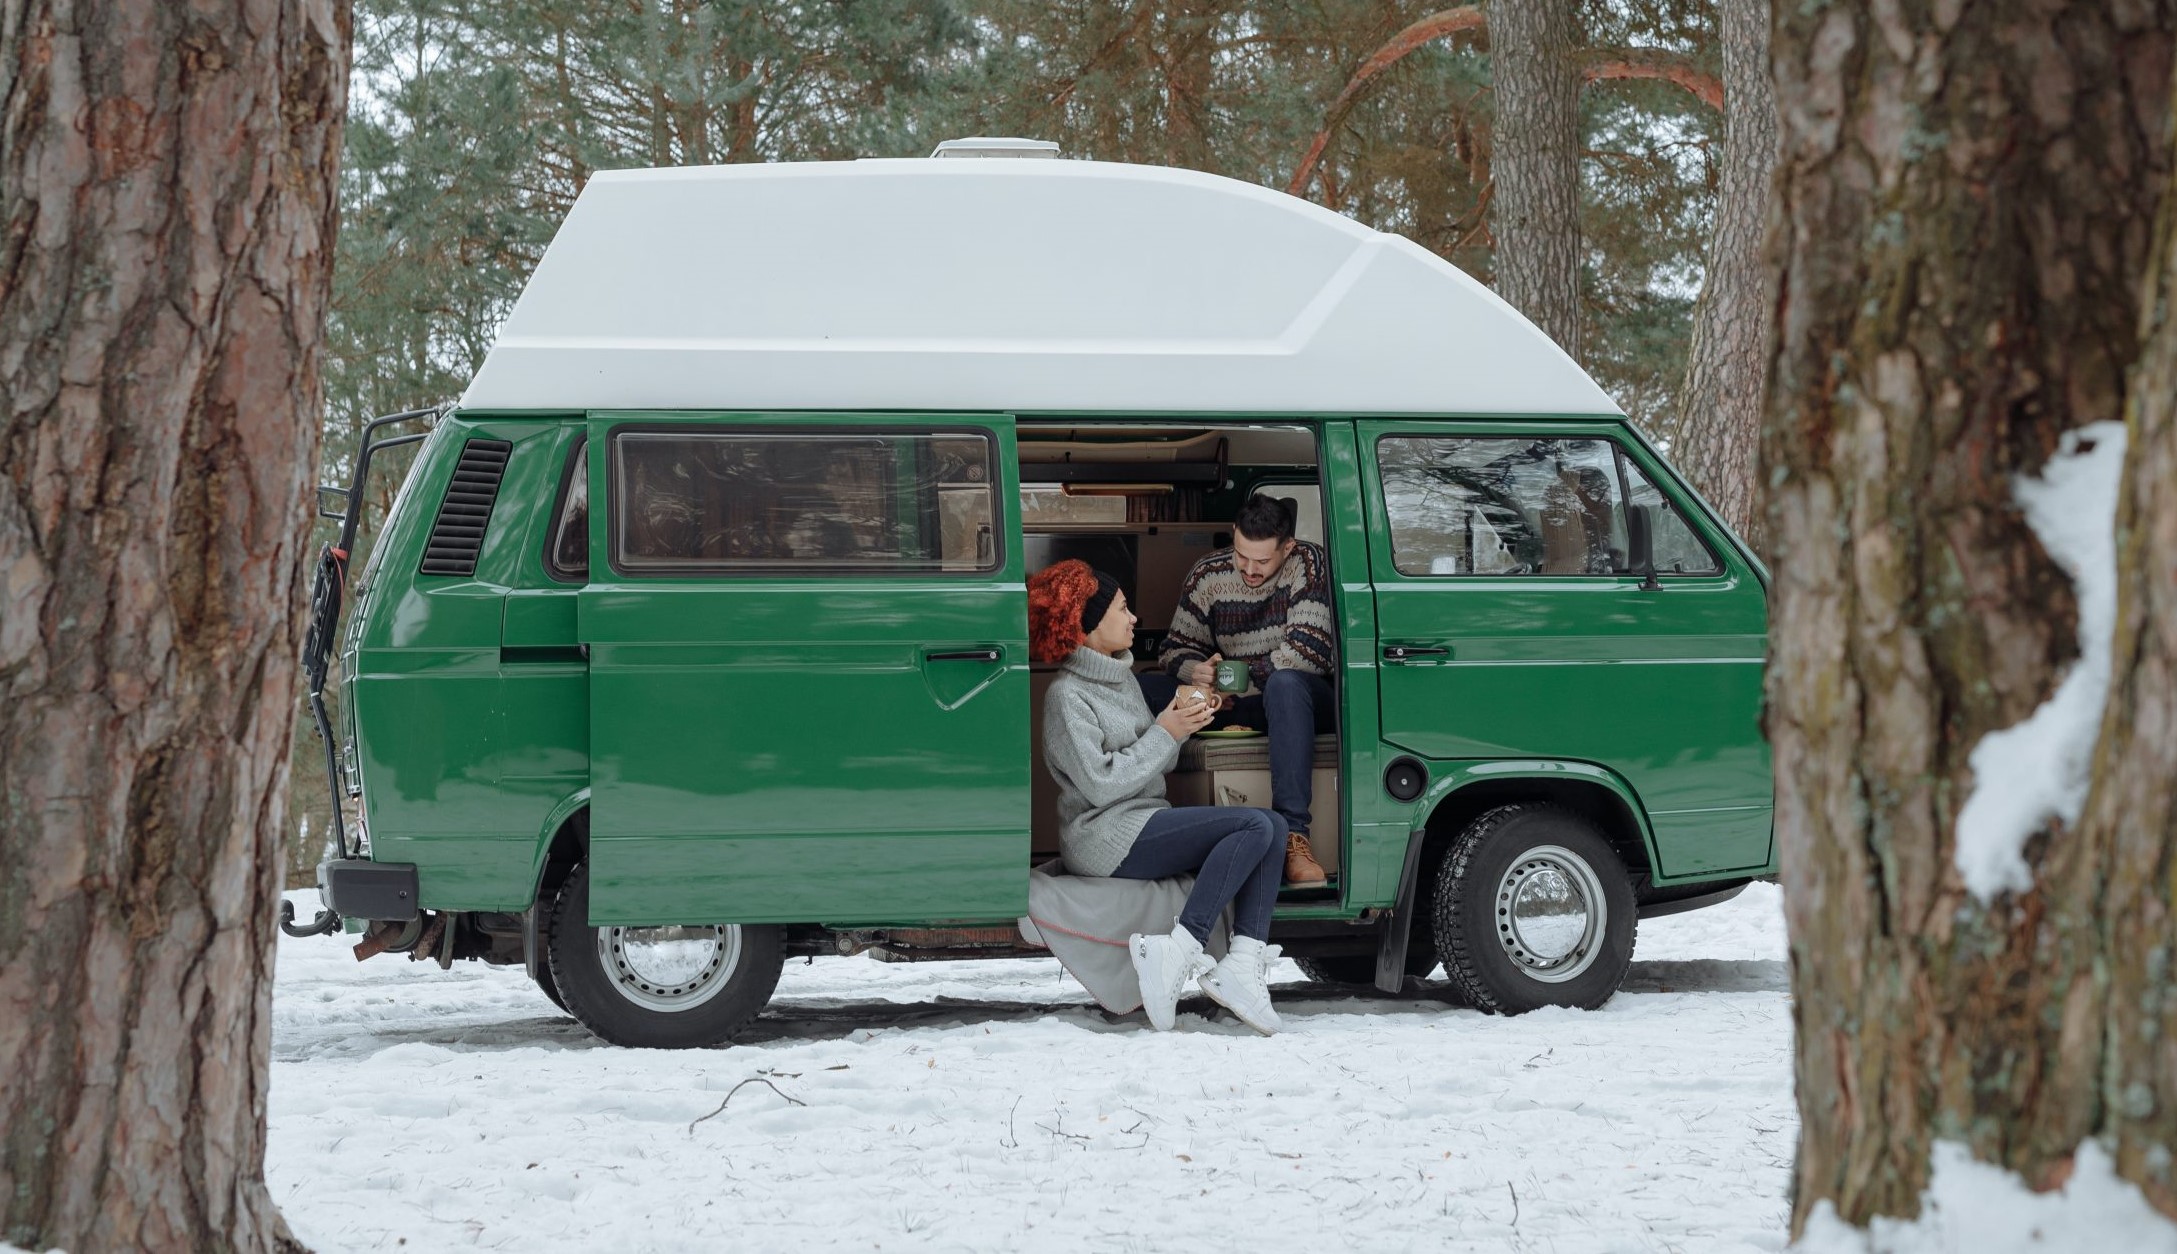 classic green campervan - get classic campervan insurance quotes